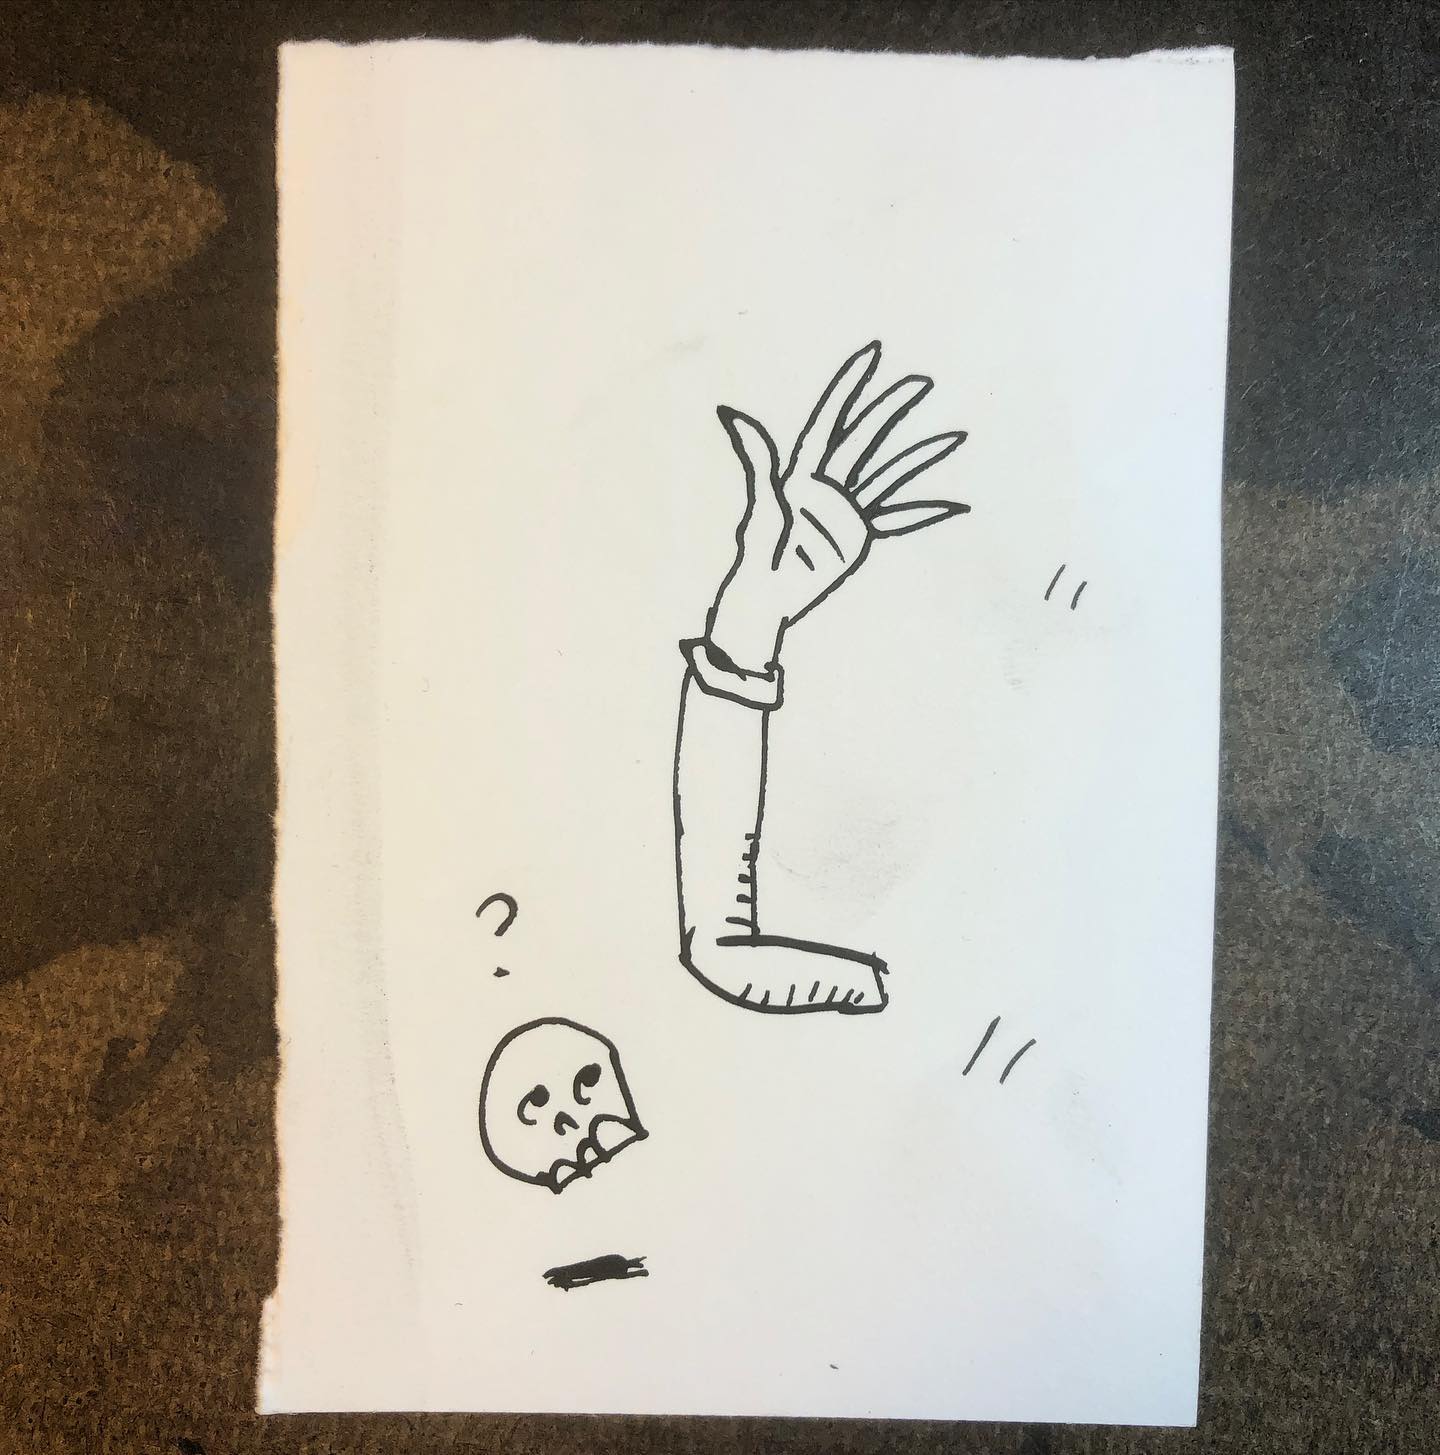 Ink Drawing - "Errant Limb"